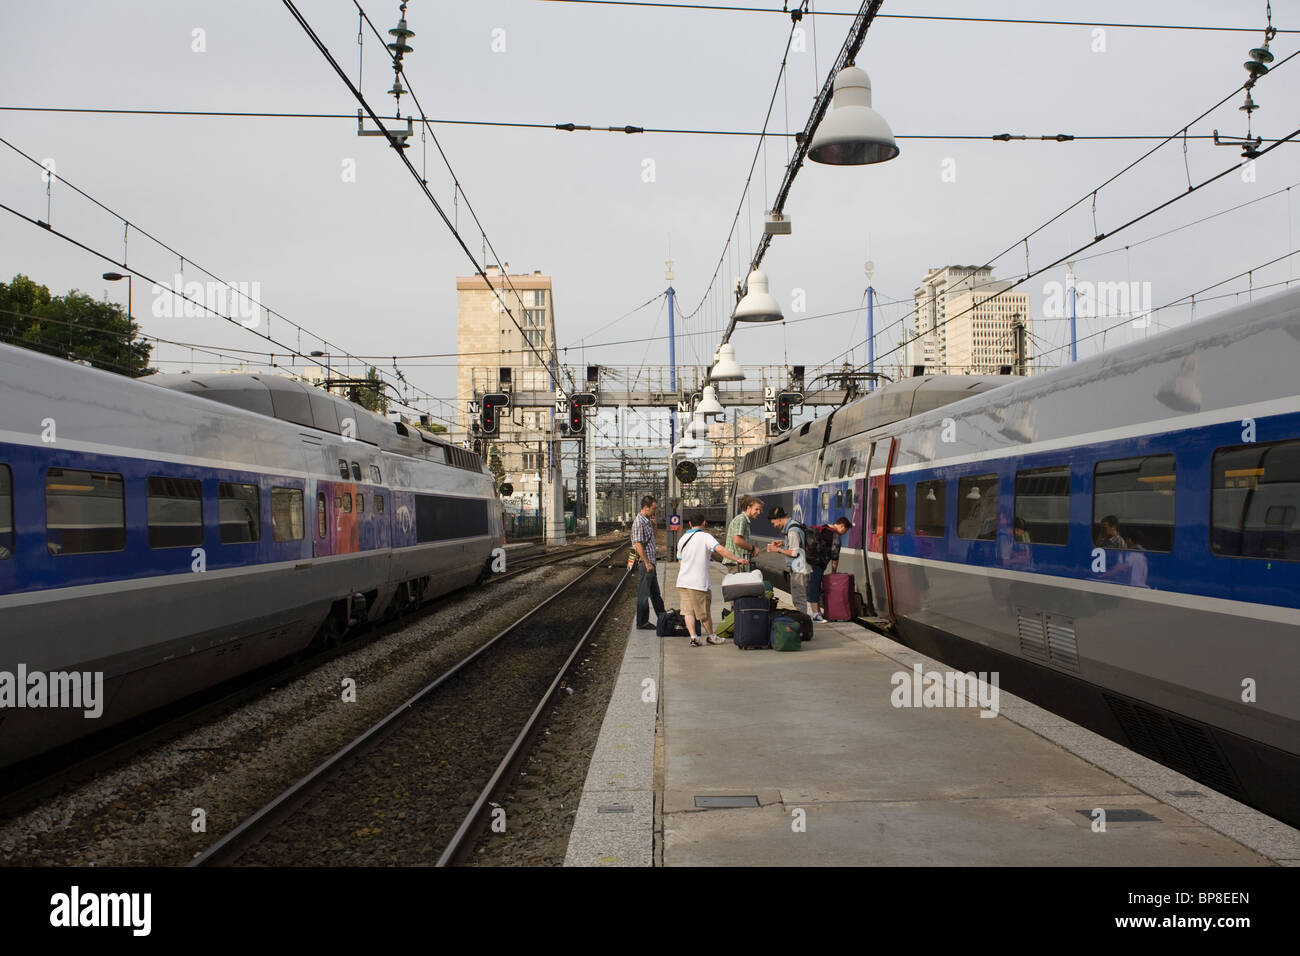 Gare Montparnasse, railway station, Paris, France. Stock Photo